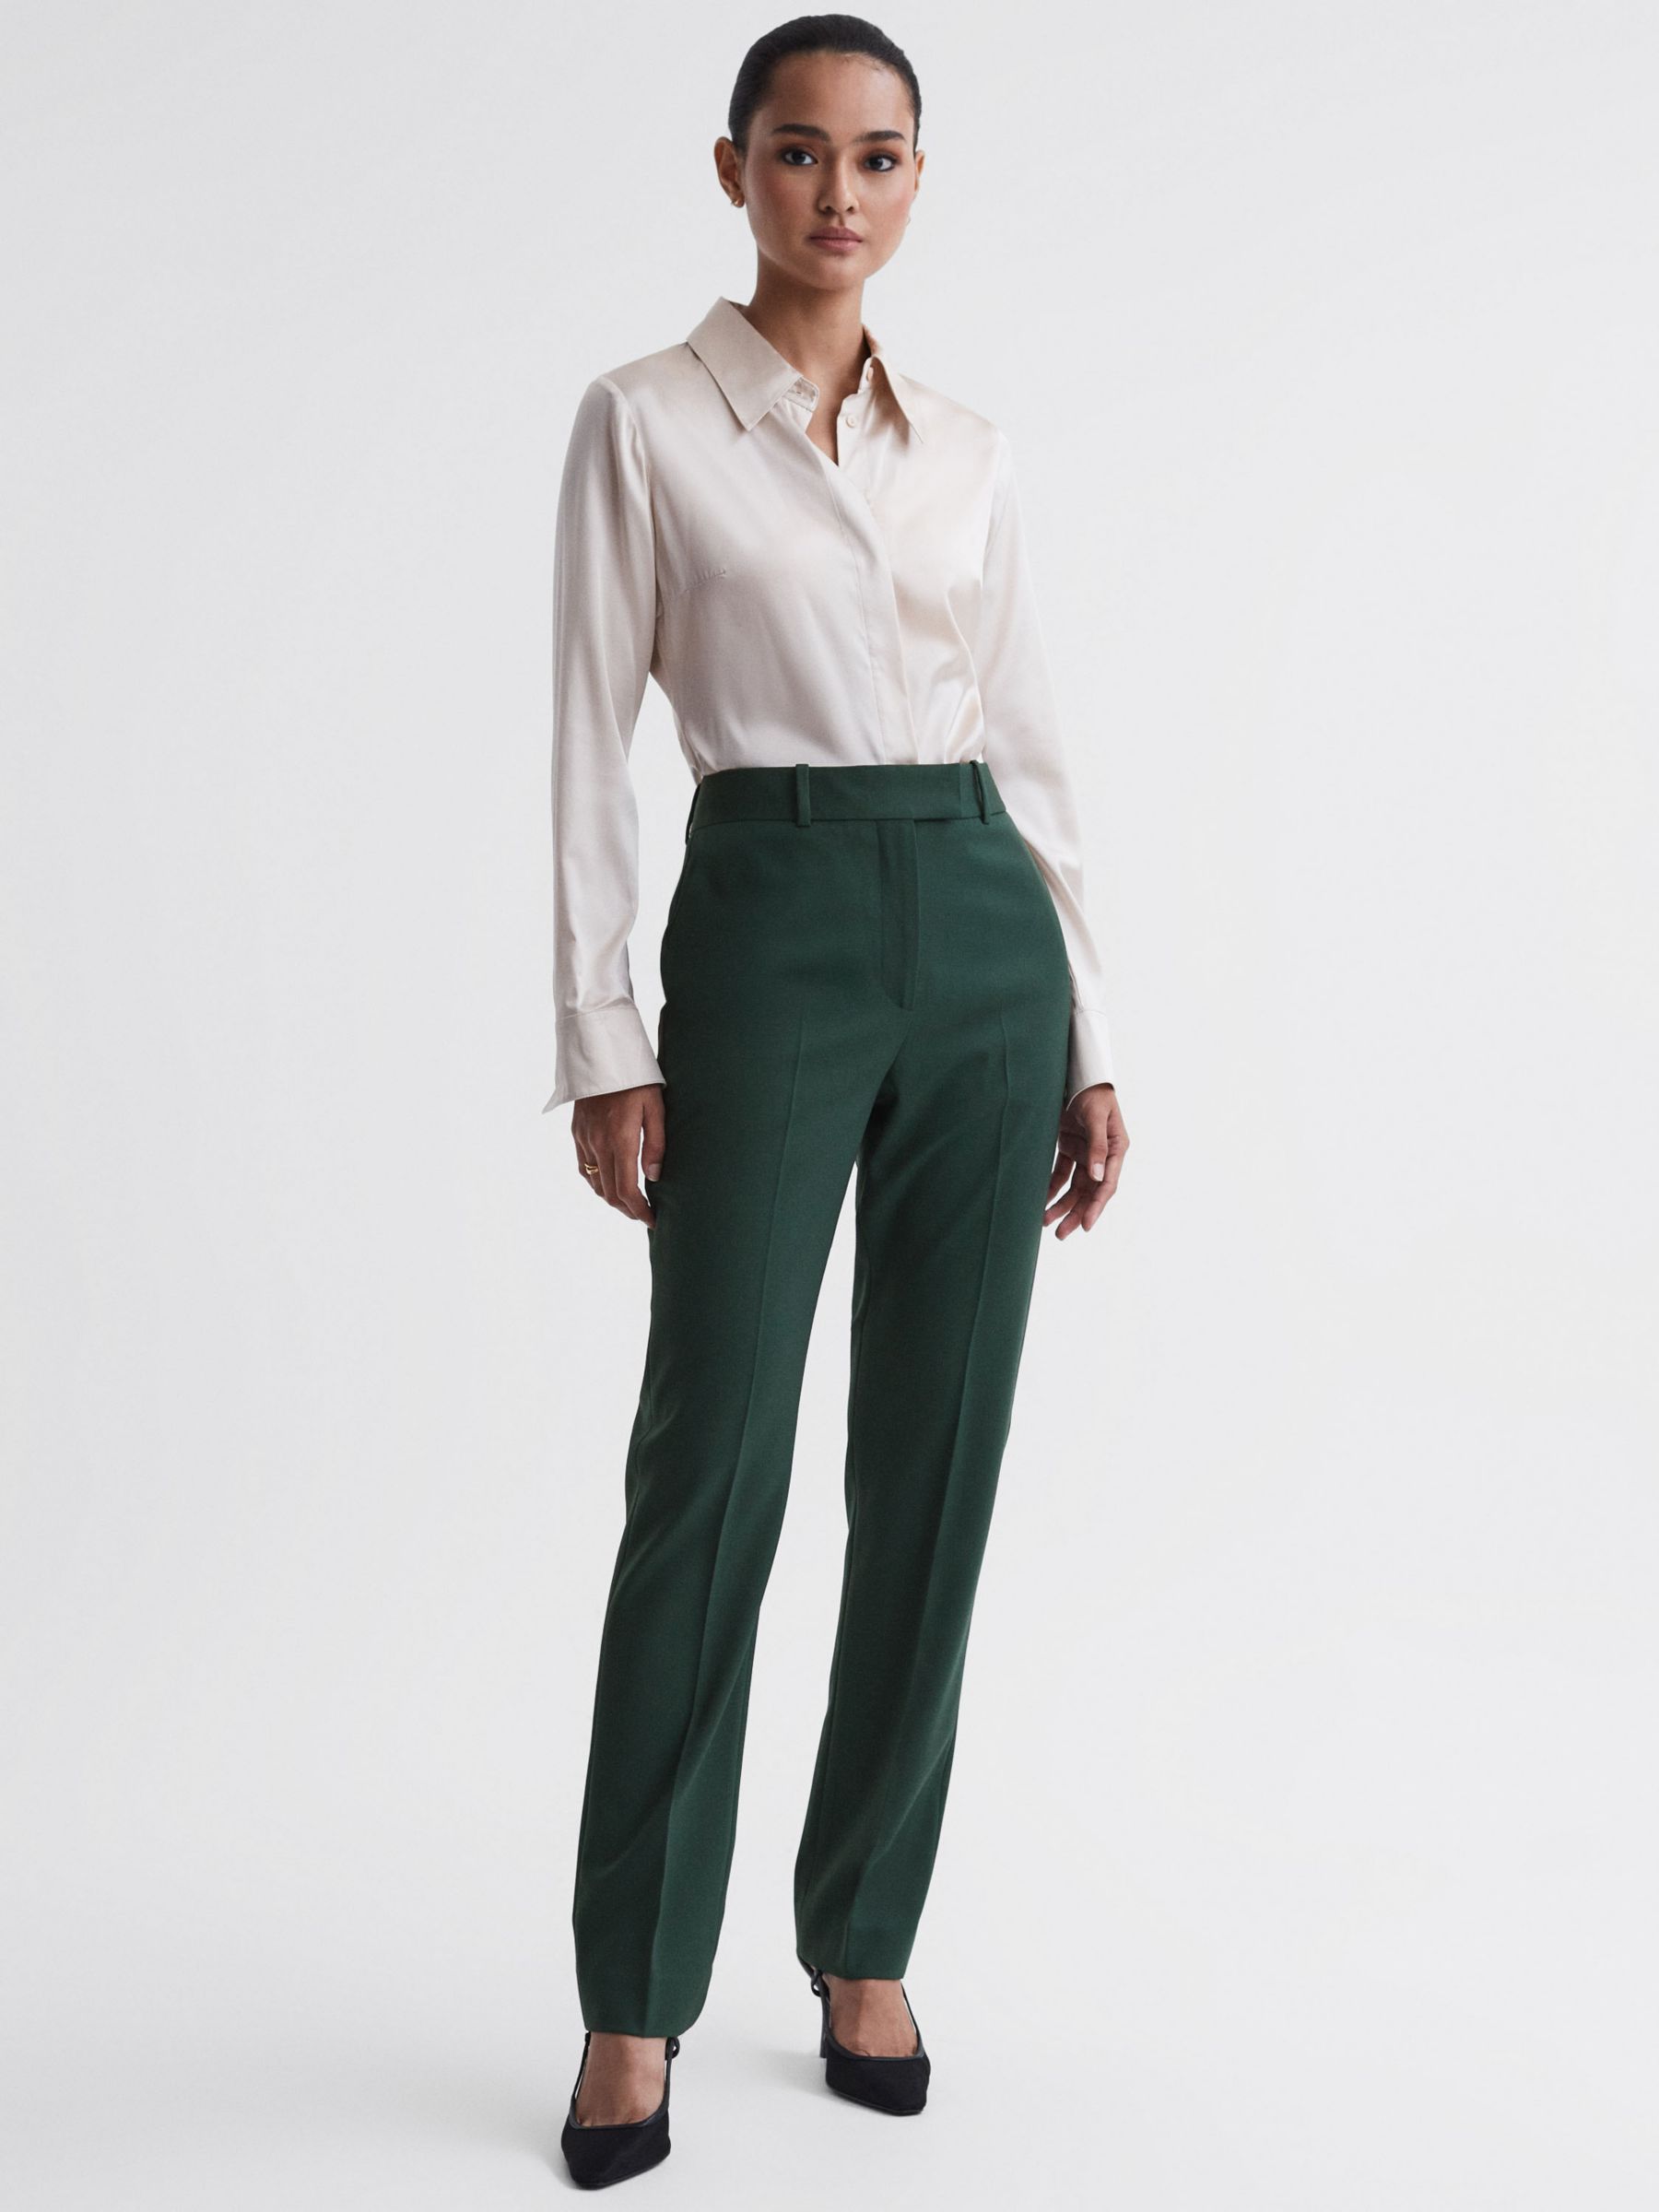 Reiss Jade Slim Fit Trousers, Bottle Green at John Lewis & Partners